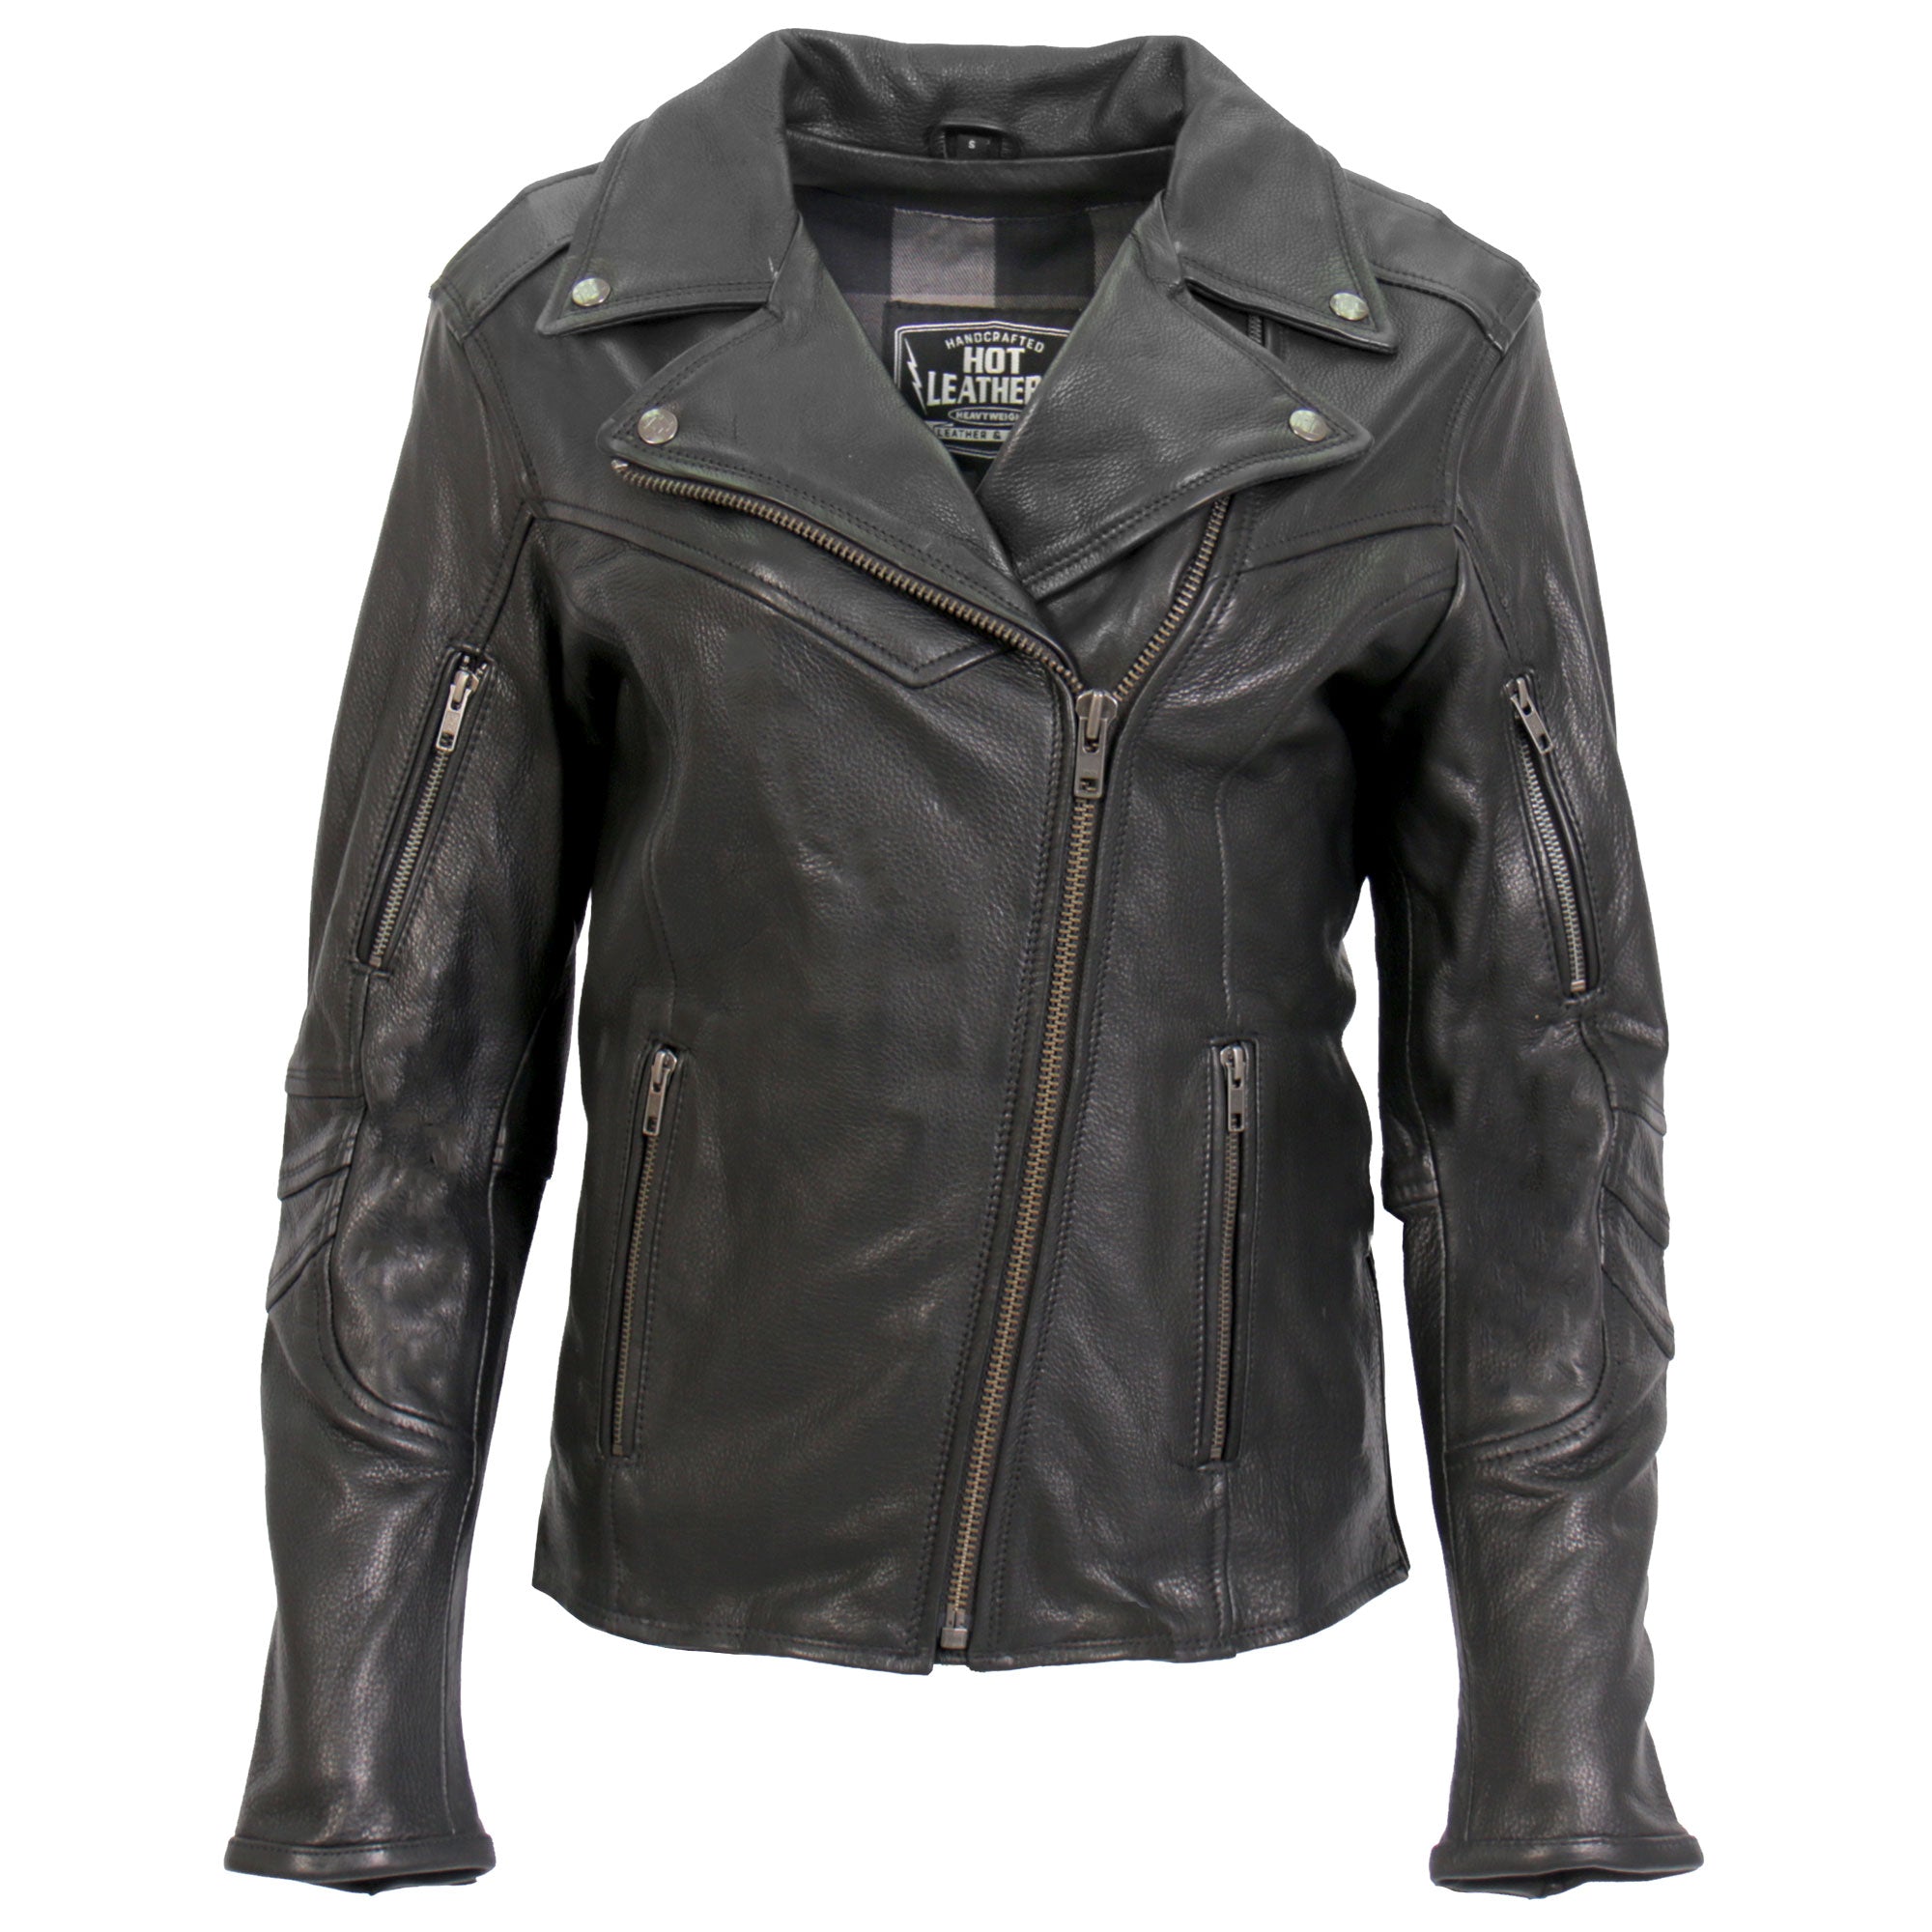 Hot Leathers JKL1034 Ladies Biker Black Leather Motorcycle Jacket with